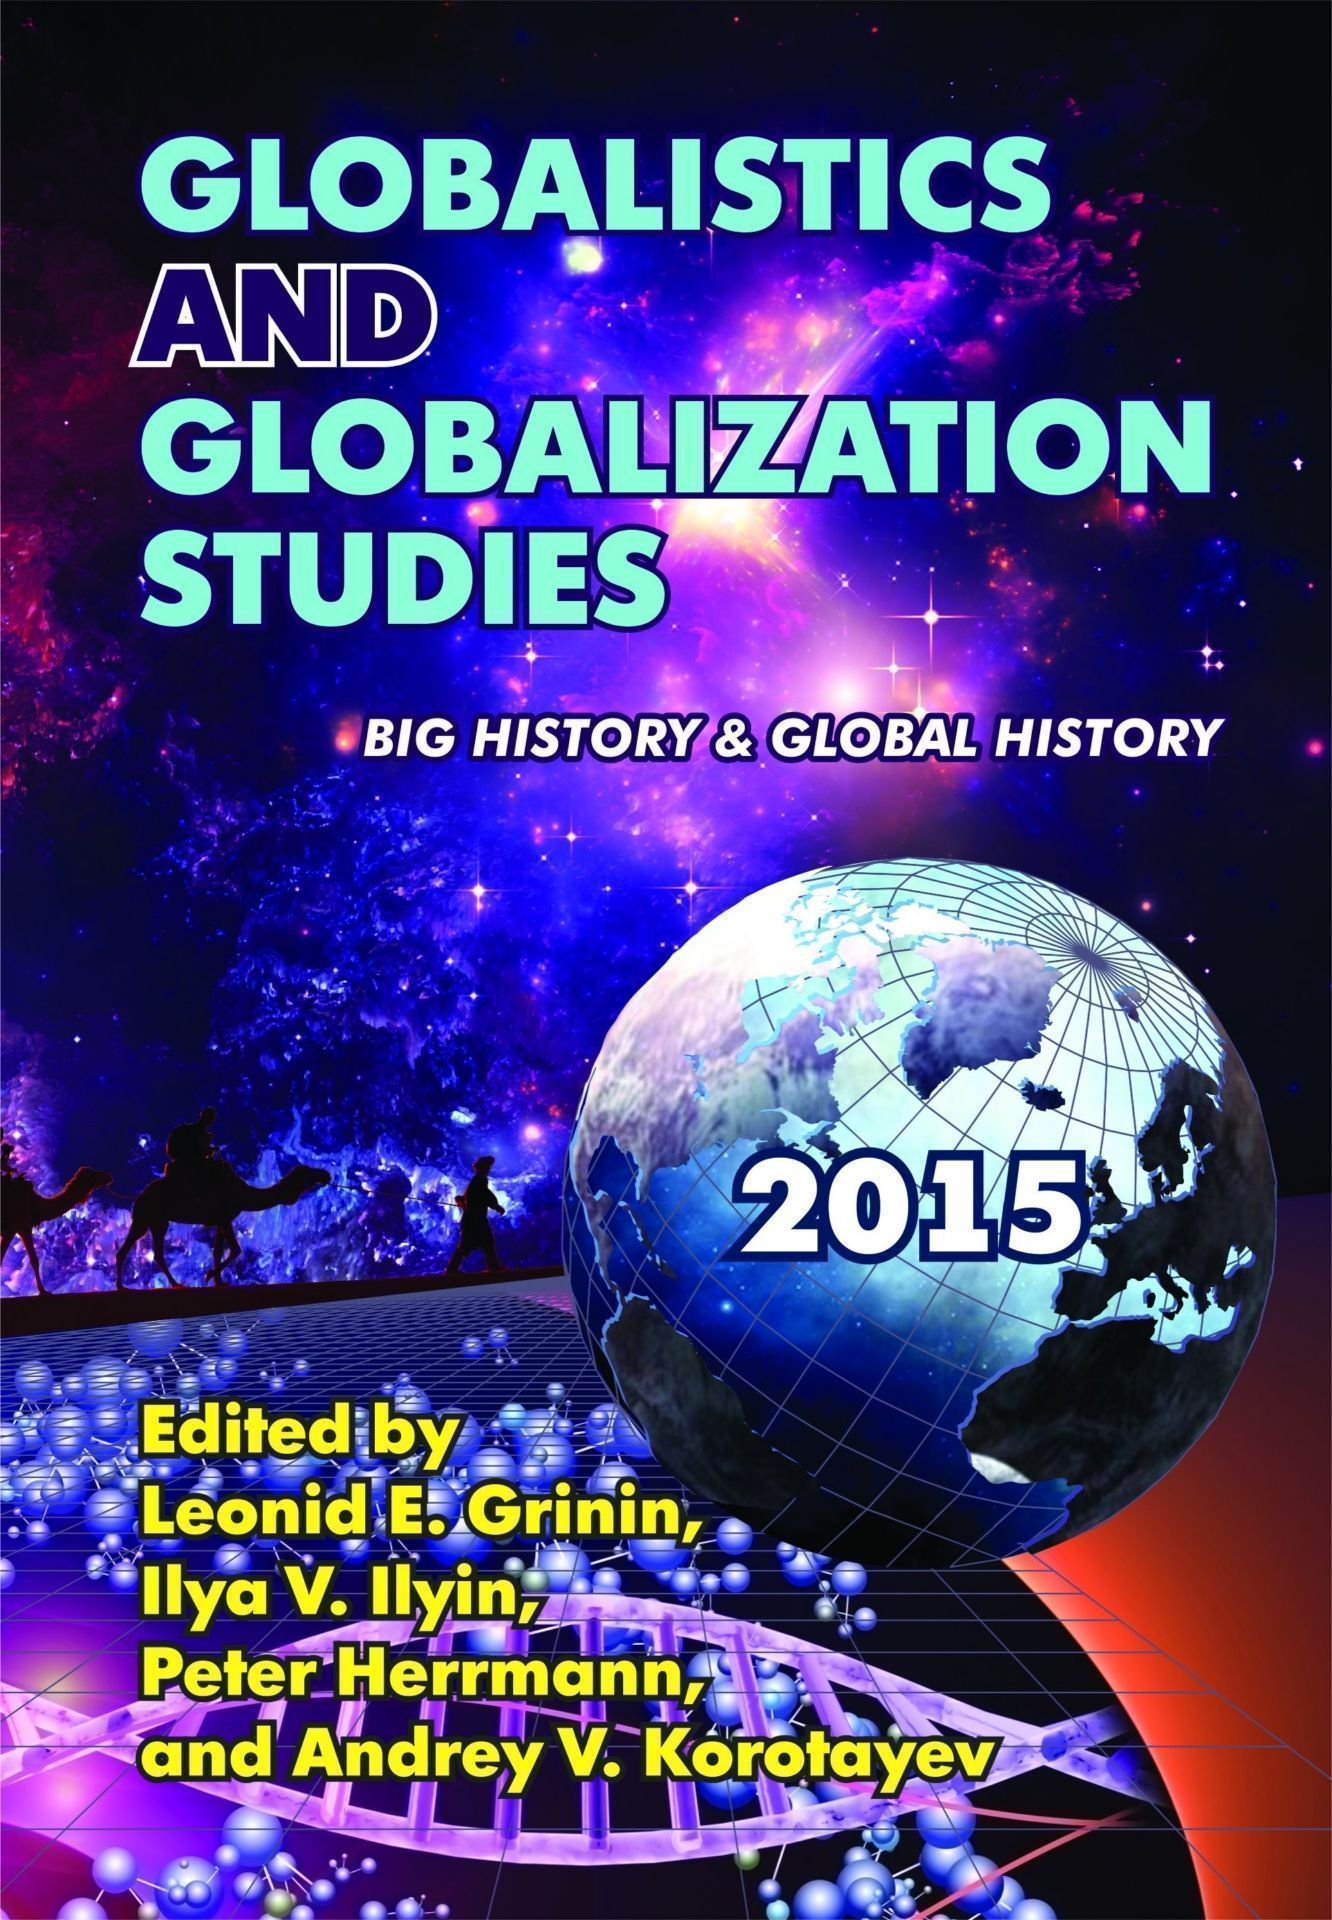 Globalistics and Globalization Studies: Big History & Global History